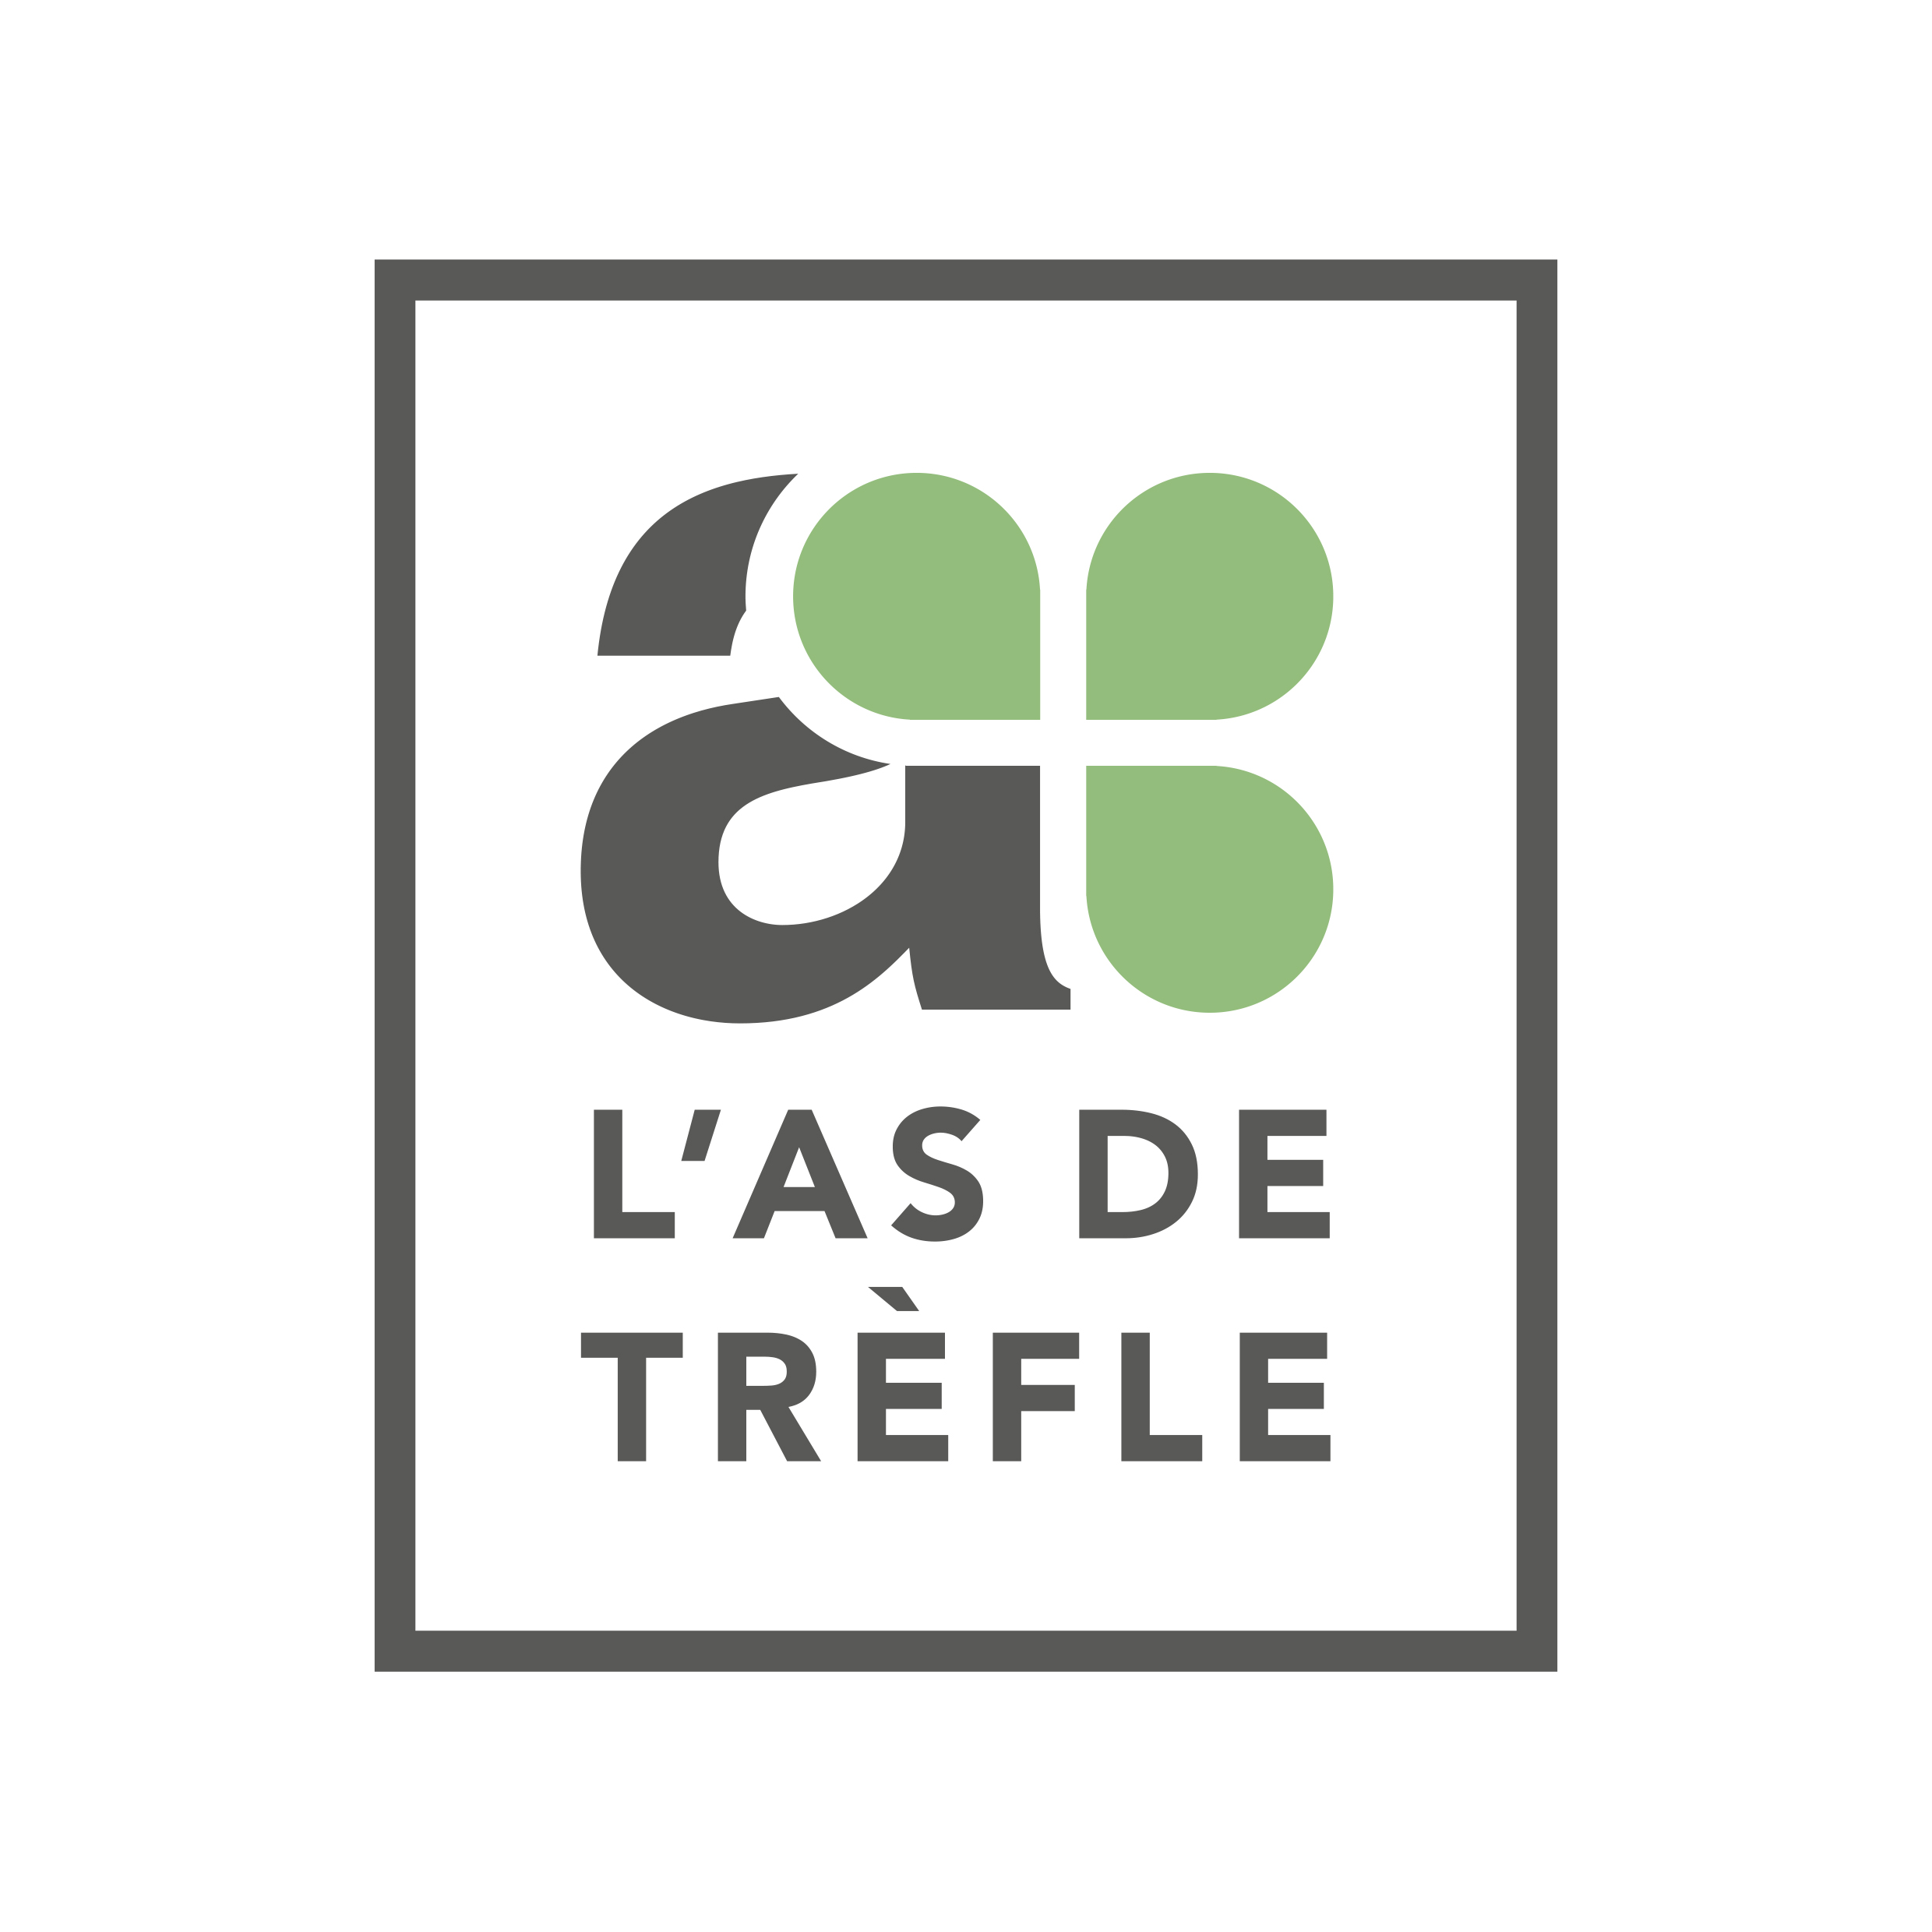 as_de_trefle_logo.png 